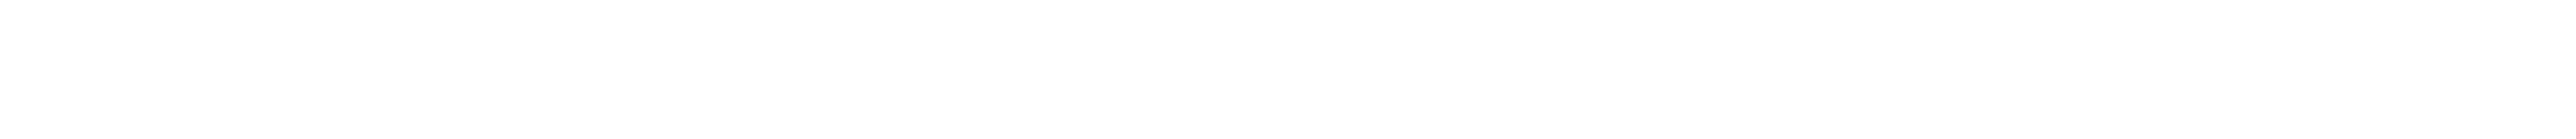 logo imax